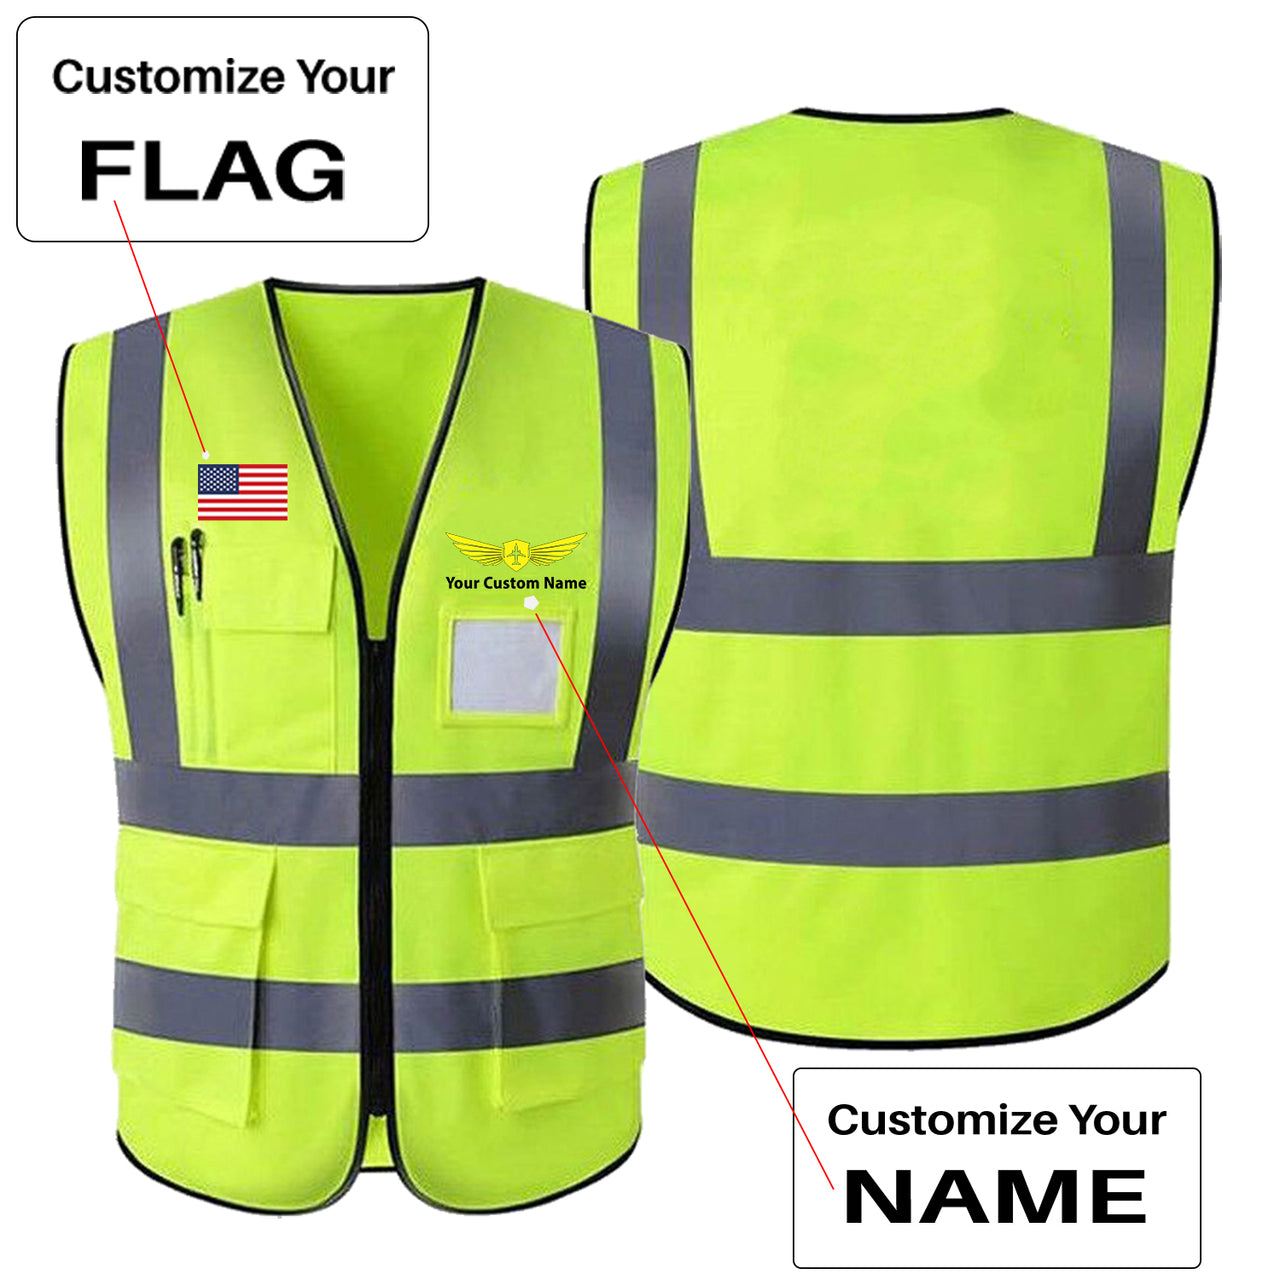 Custom Flag & Name with Badge 2 Designed Reflective Vests